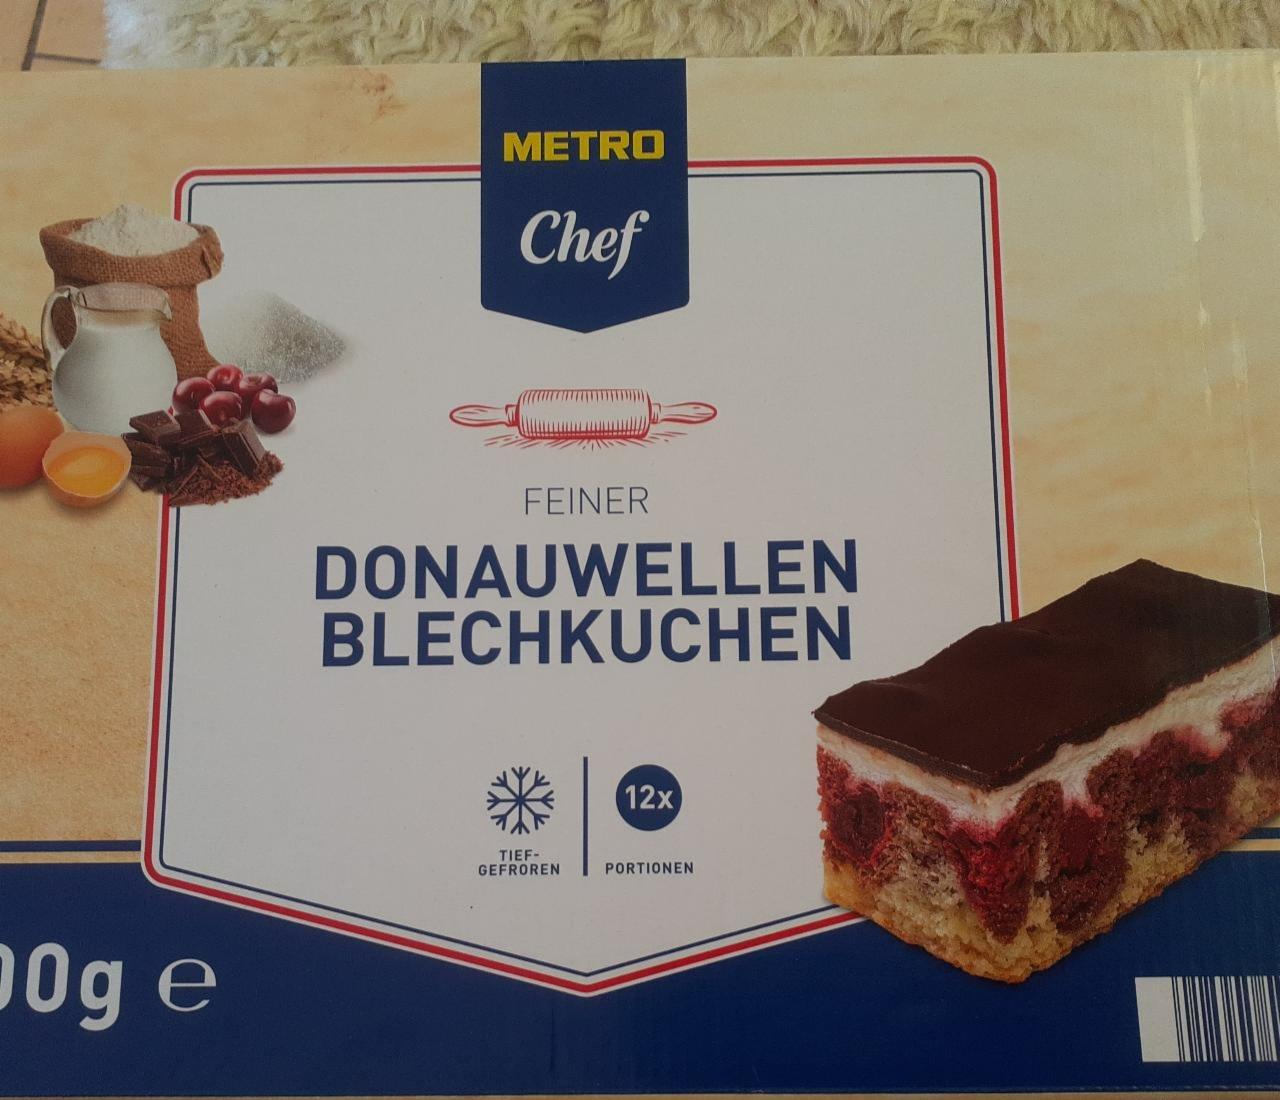 Fotografie - Donauwellen blechkuchen Metro Chef